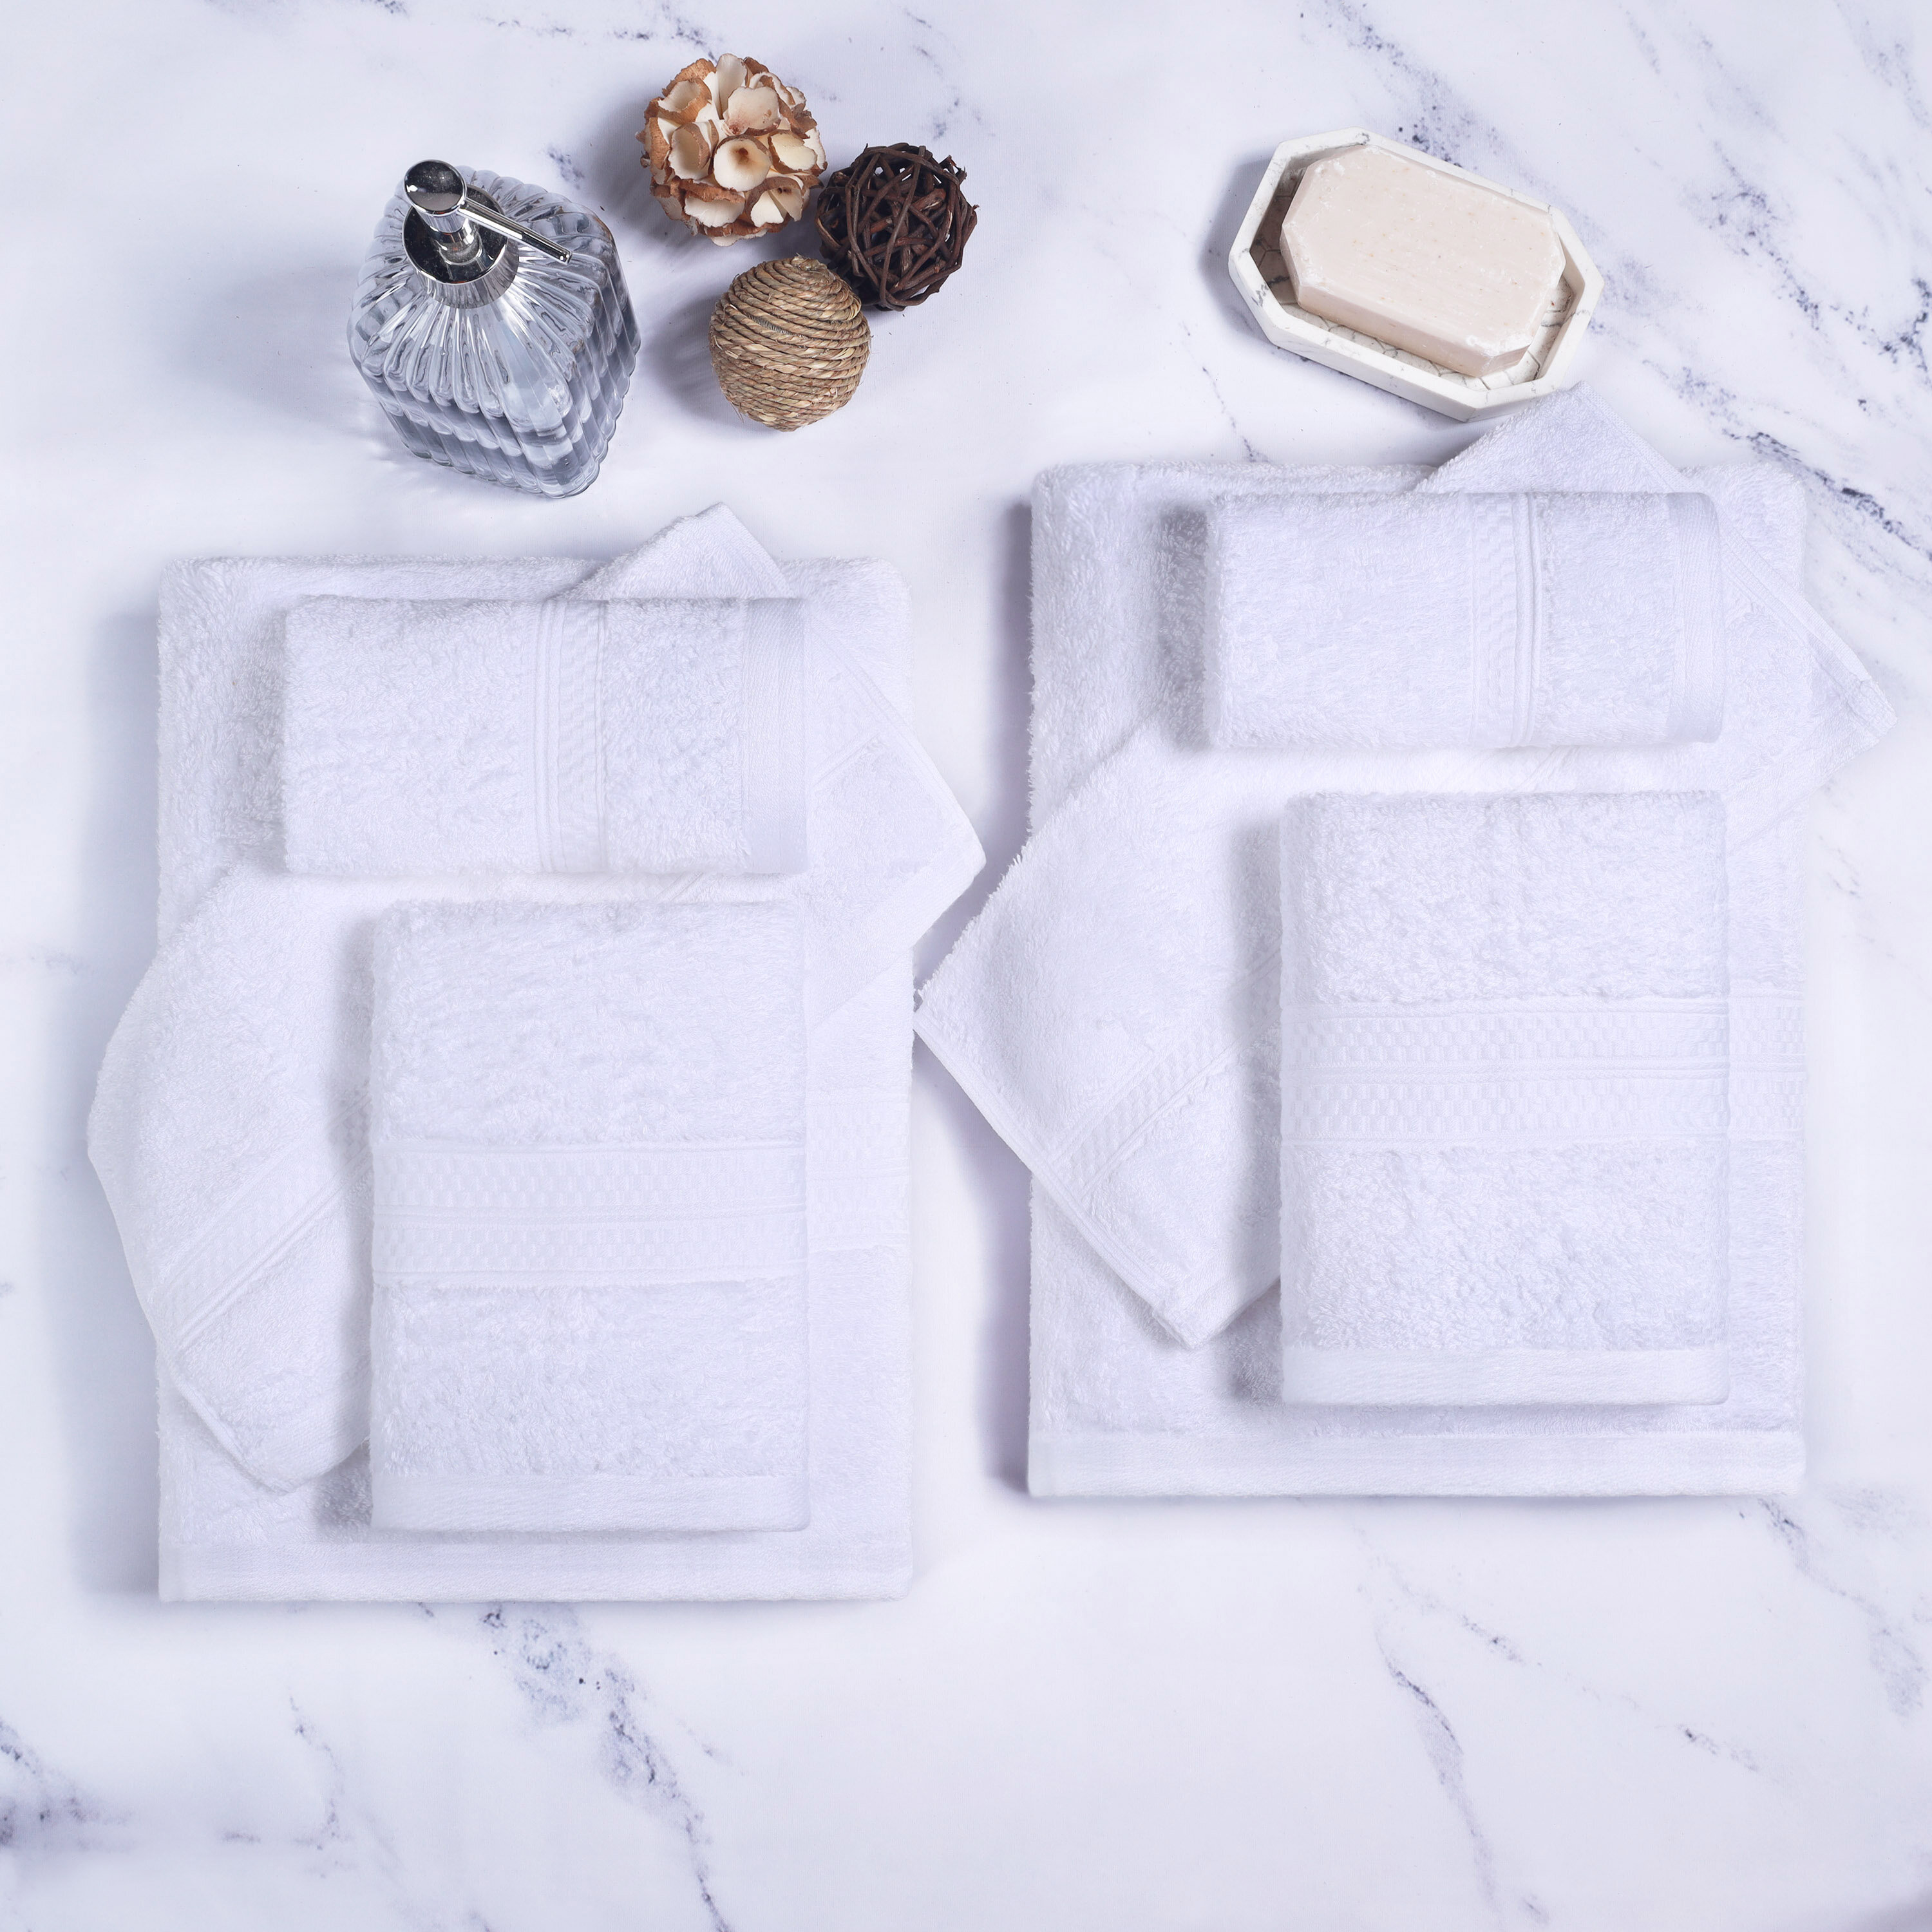 Jml Bamboo Bath Towels 2 Piece Luxury Bath Towel Set for Bathroom